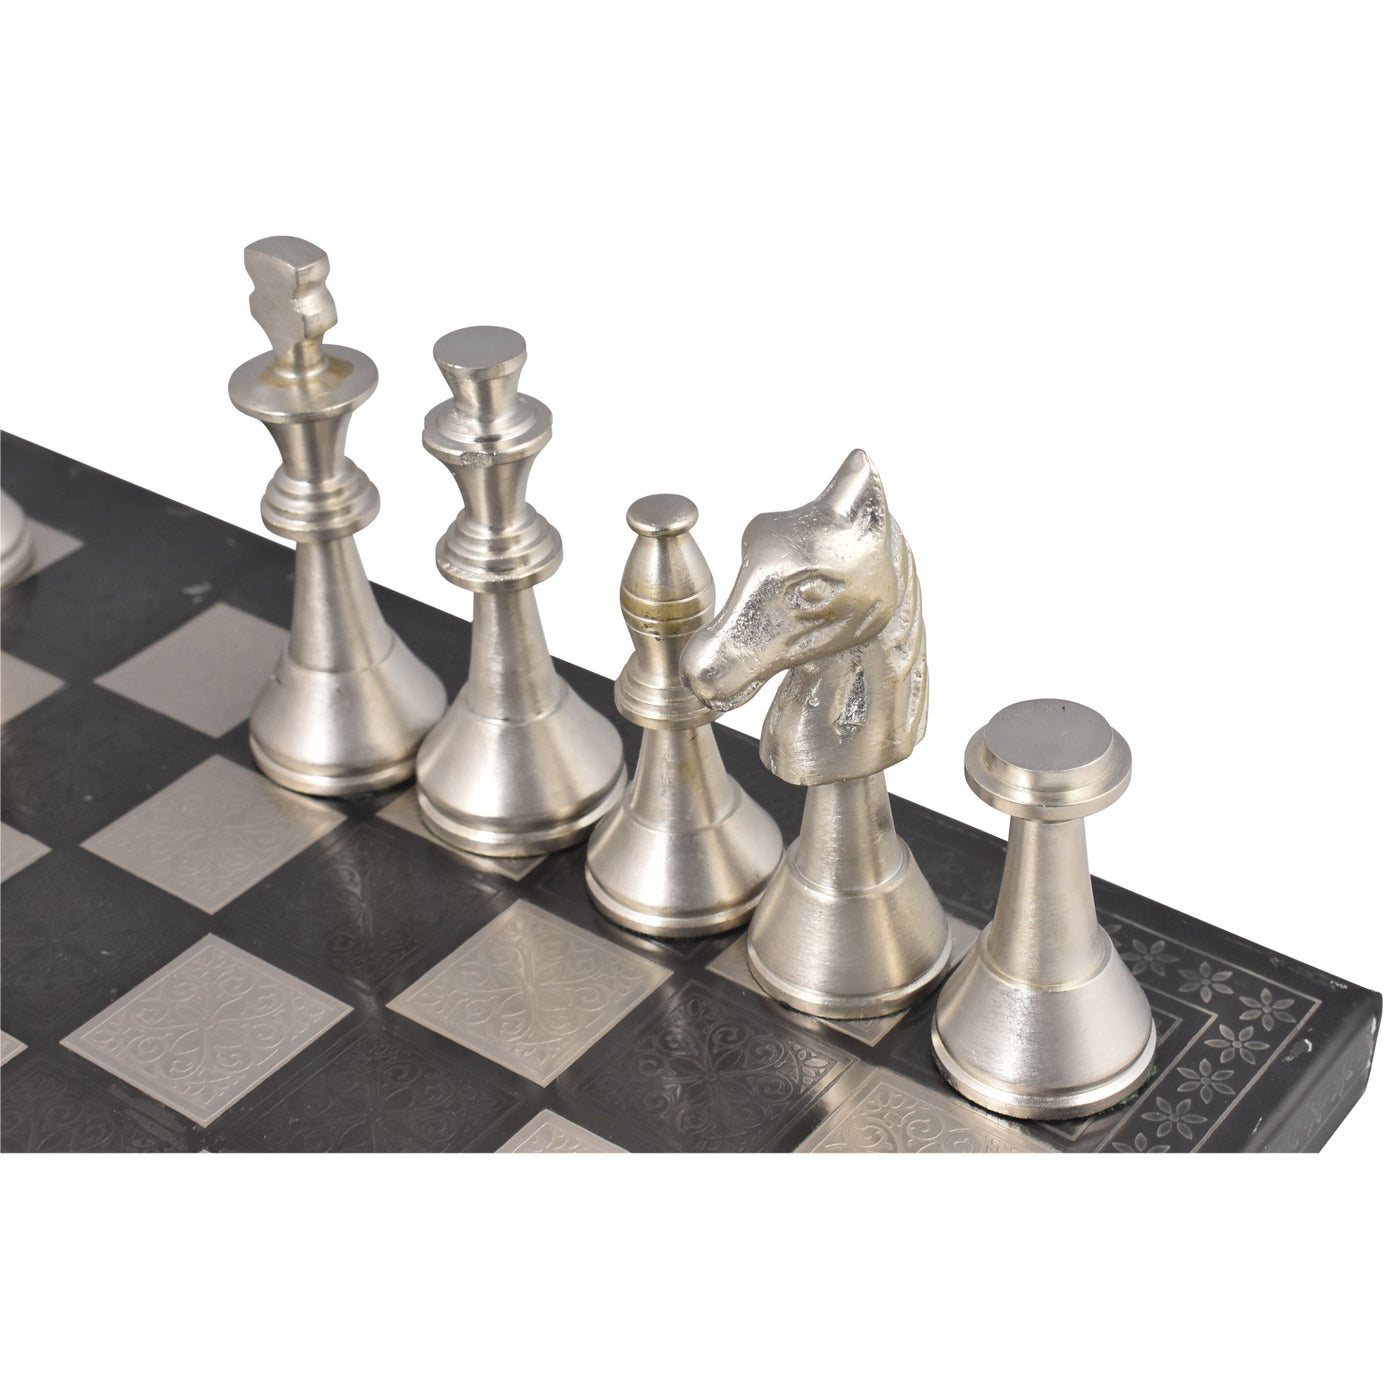 Aluminium Metal Chess Pieces & Board Set